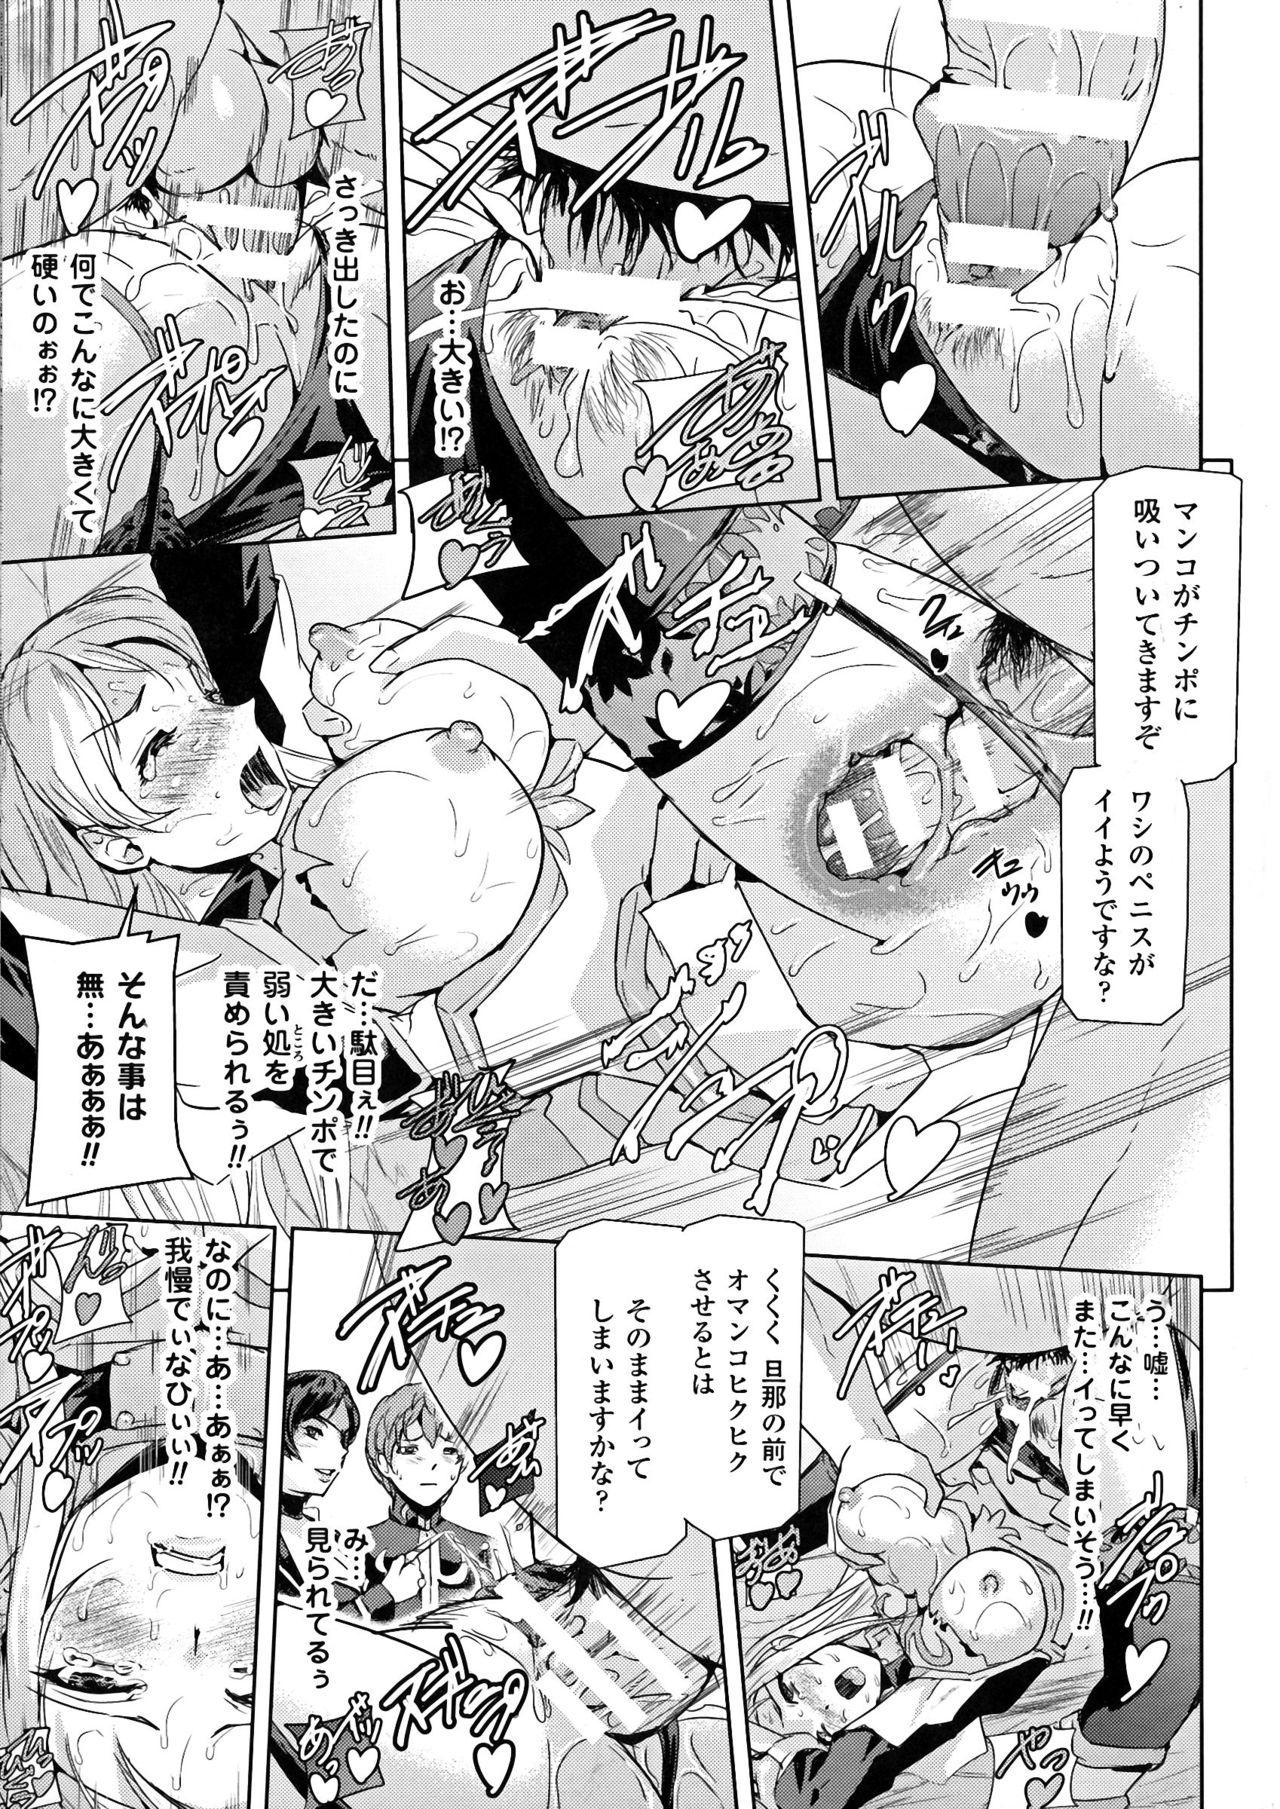 Seigi no Heroine Kangoku File DX vol. 6 59